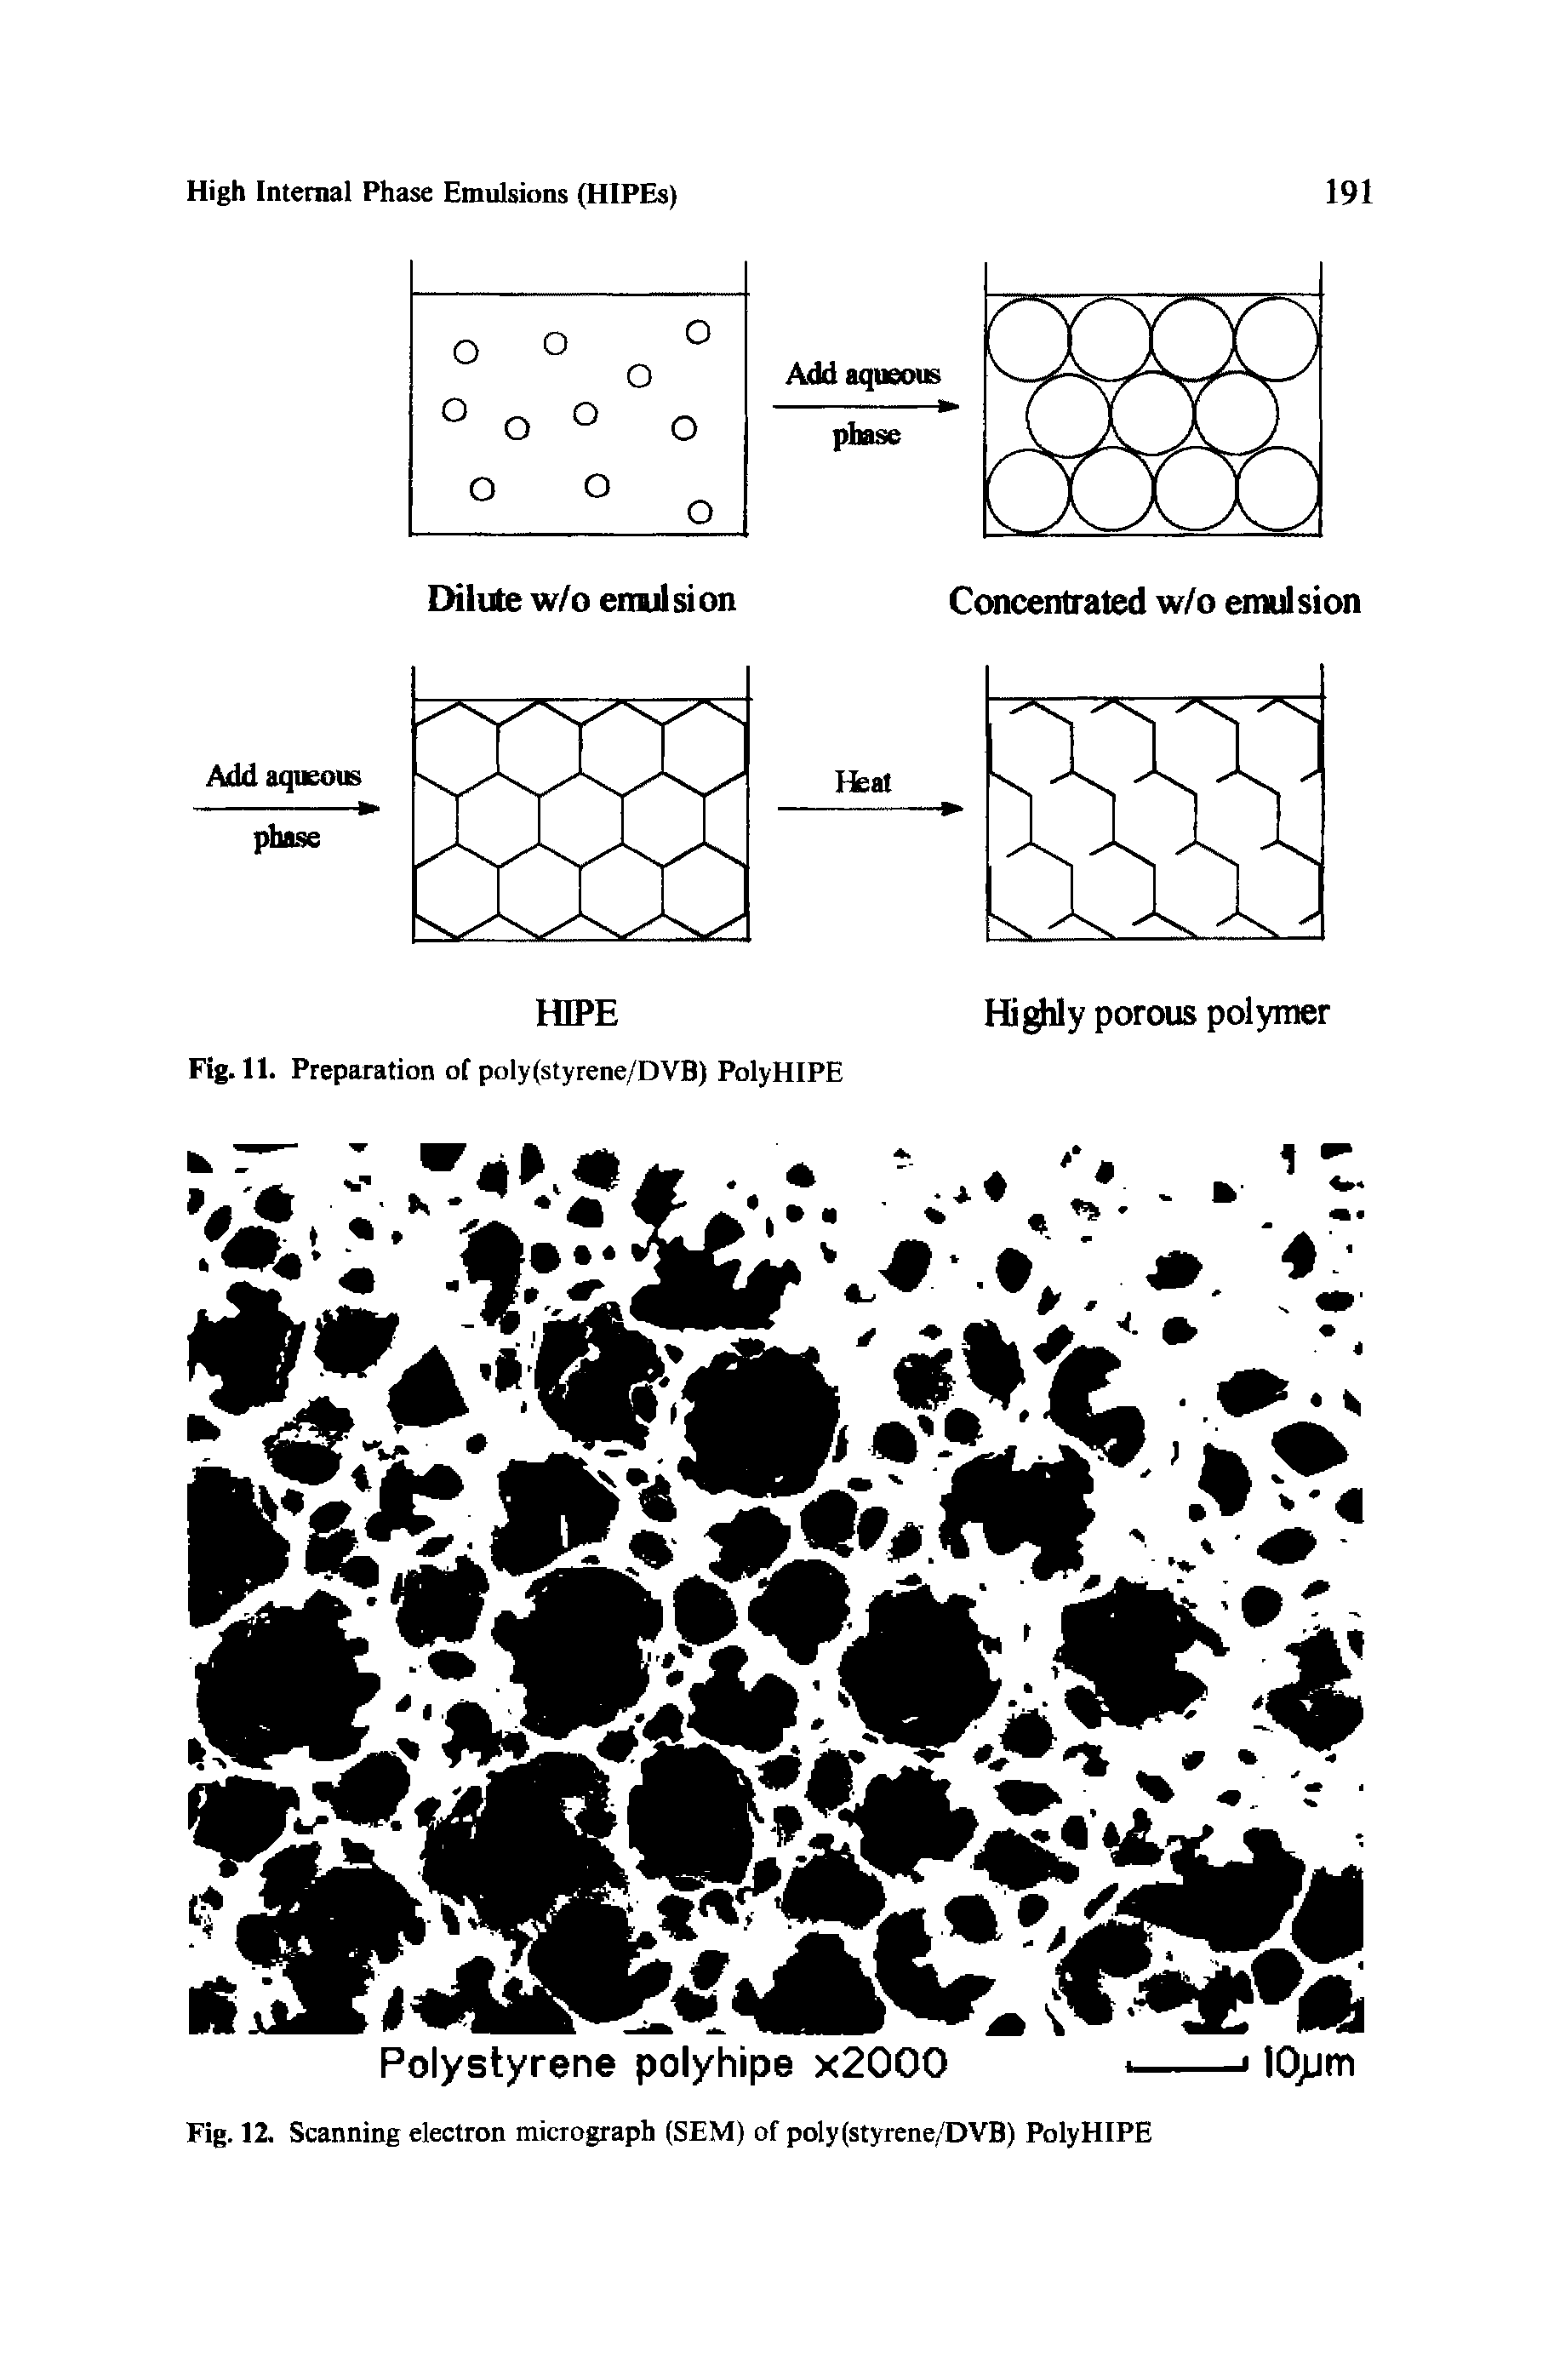 Fig. 12. Scanning electron micrograph (SEM) of poly(styrene/DVB) PolyHIPE...